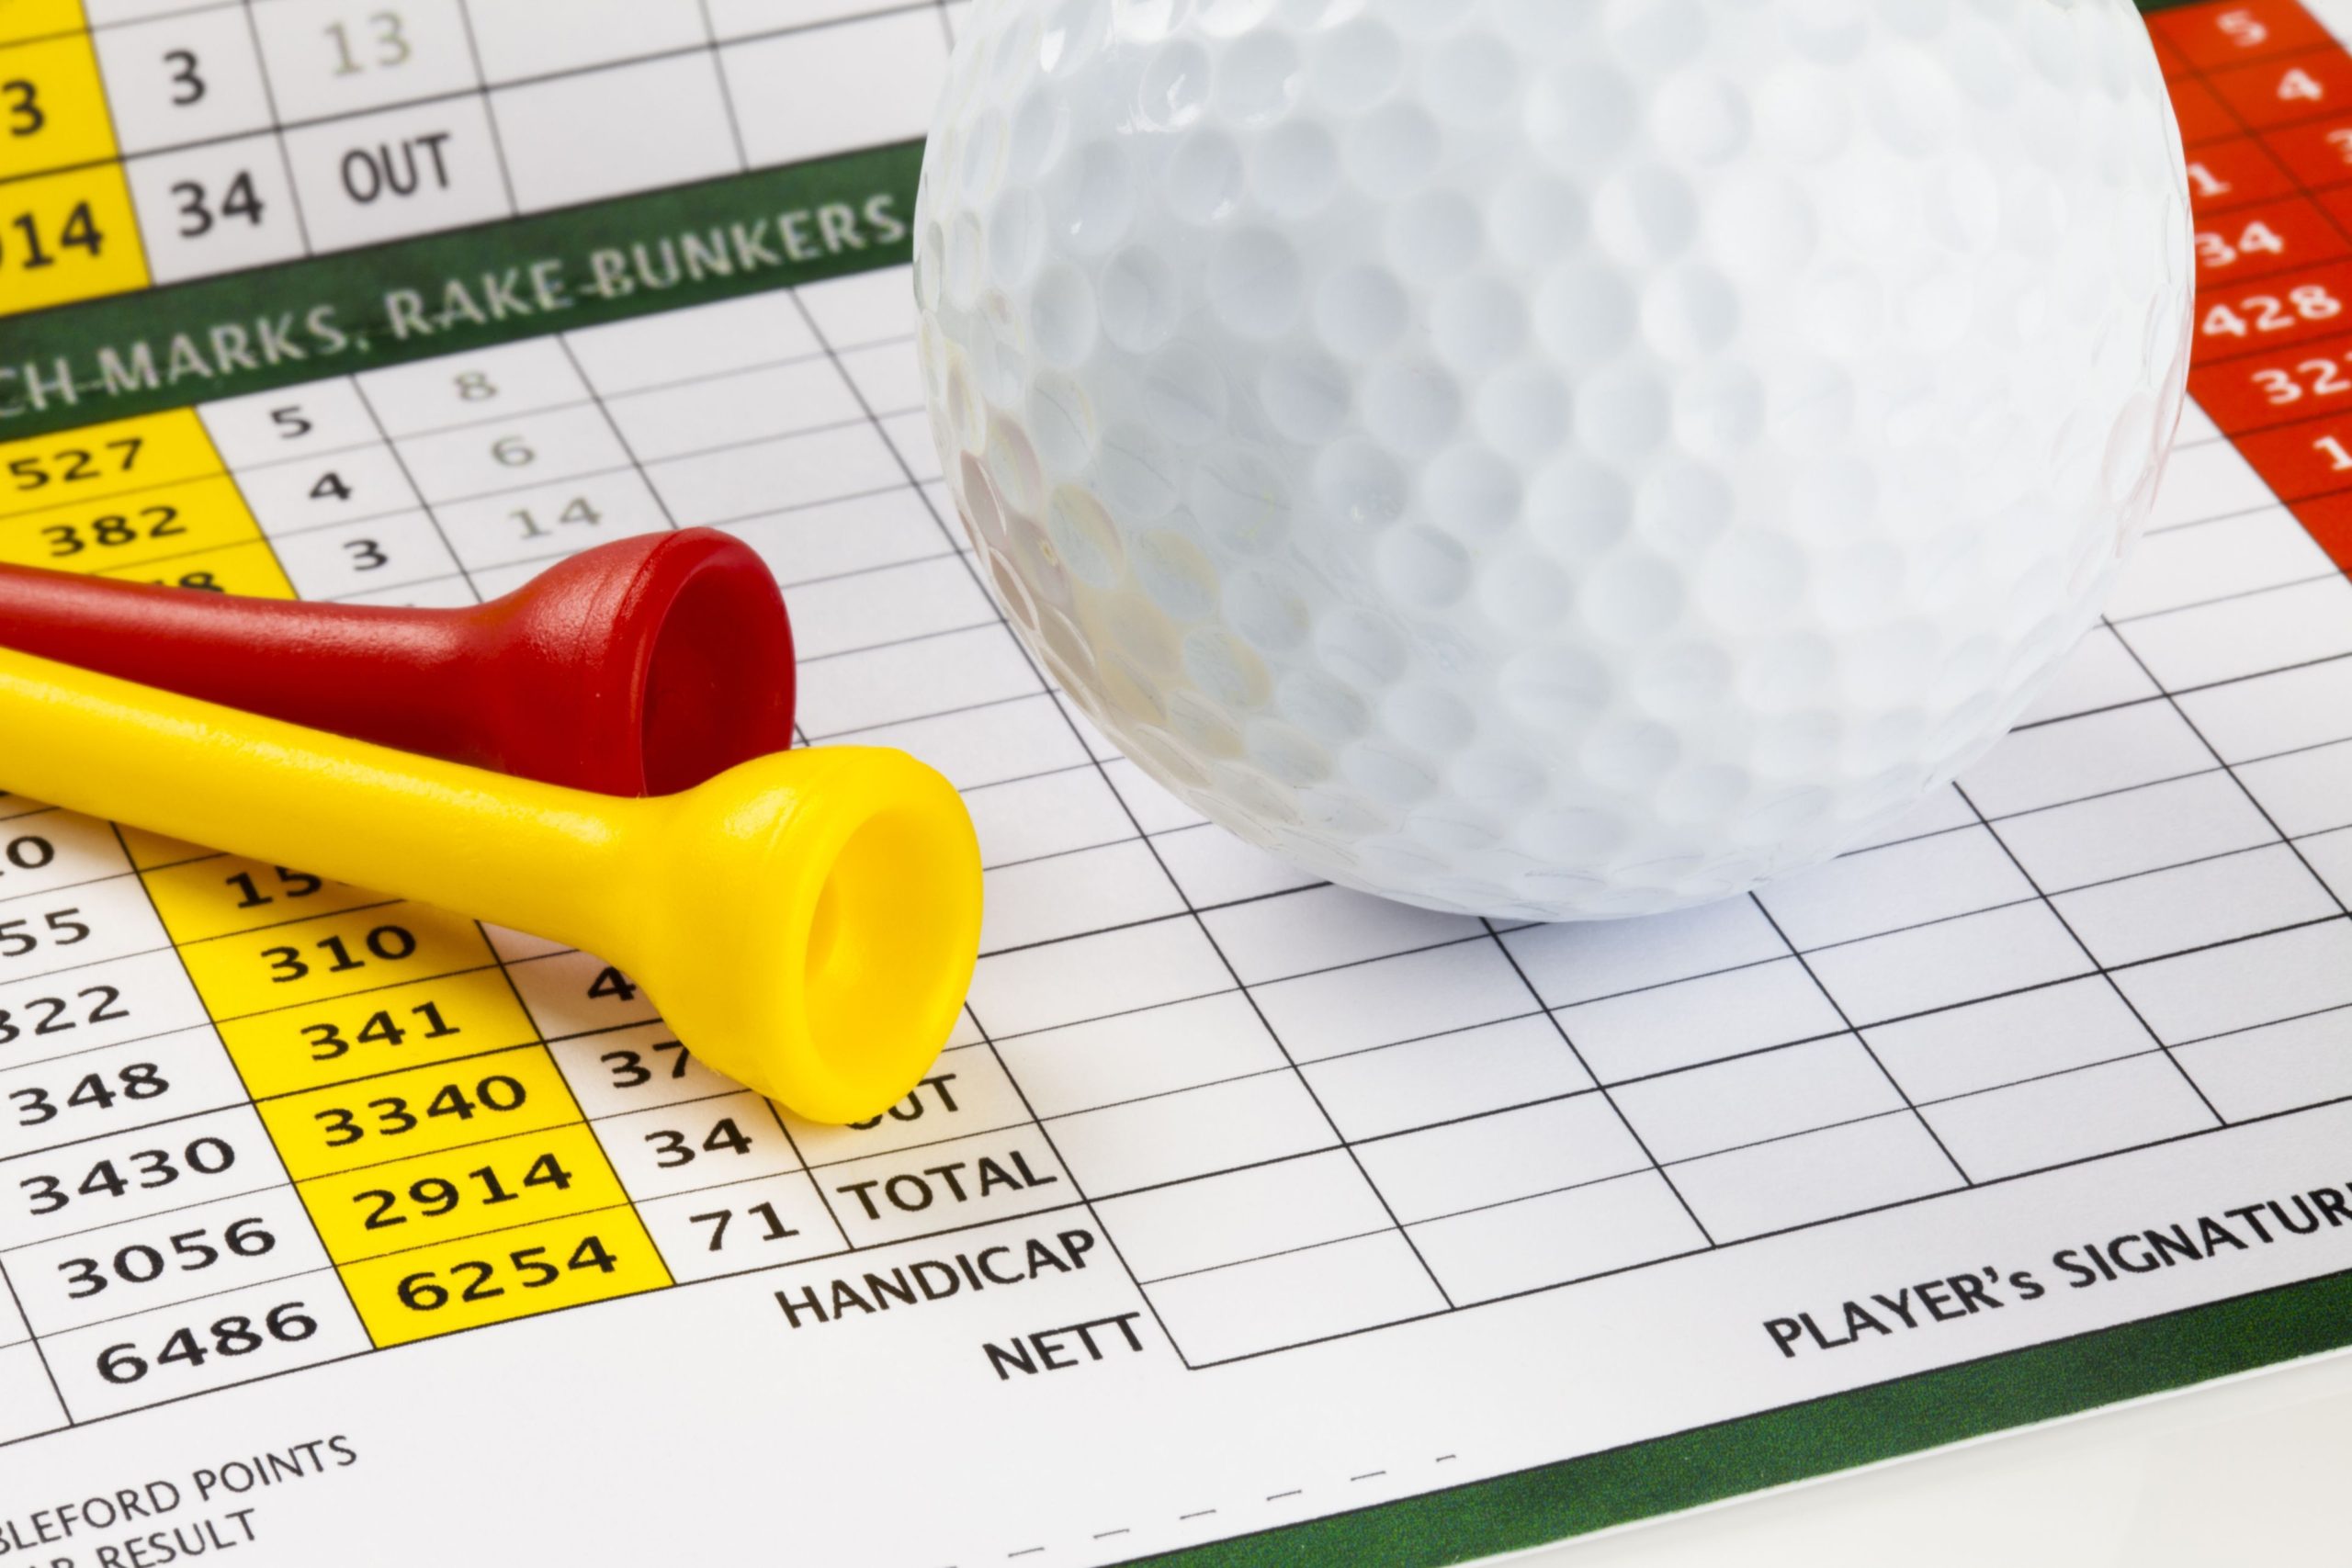 golf-scorecard-general-56a3d60c5f9b58b7d0d40655